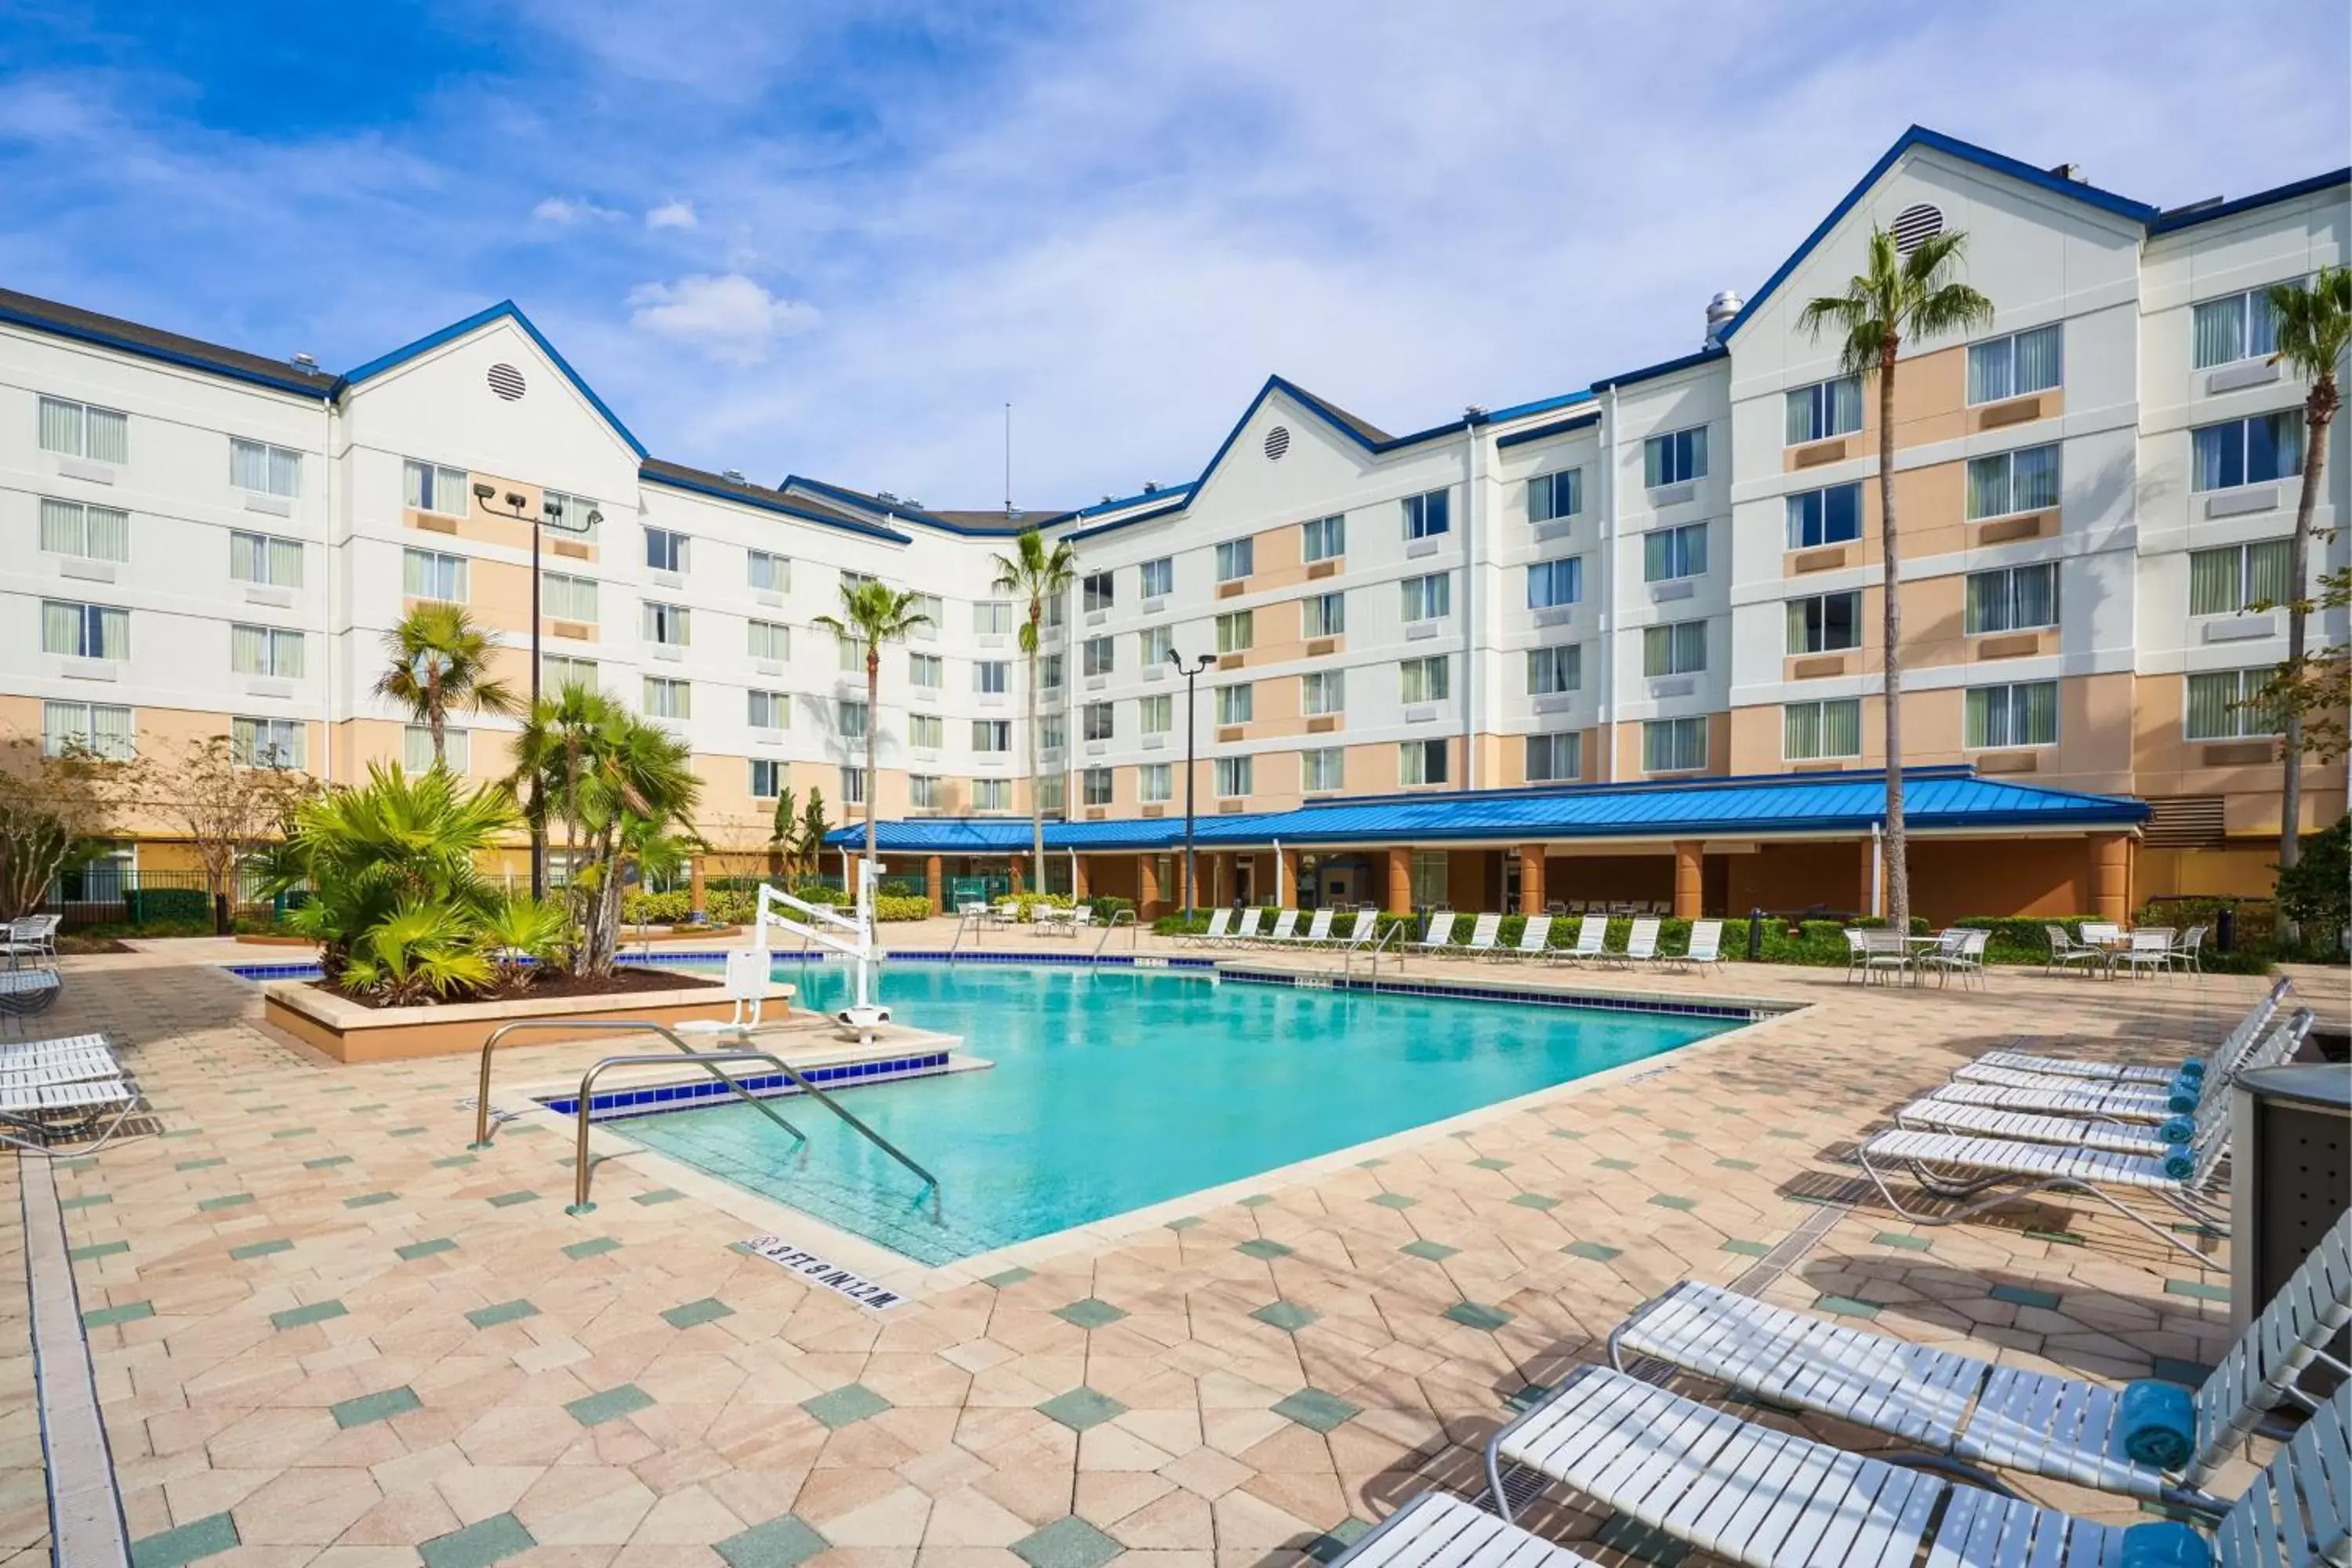 Swimming Pool in Fairfield Inn & Suites by Marriott Orlando Lake Buena Vista in the Marriott Village